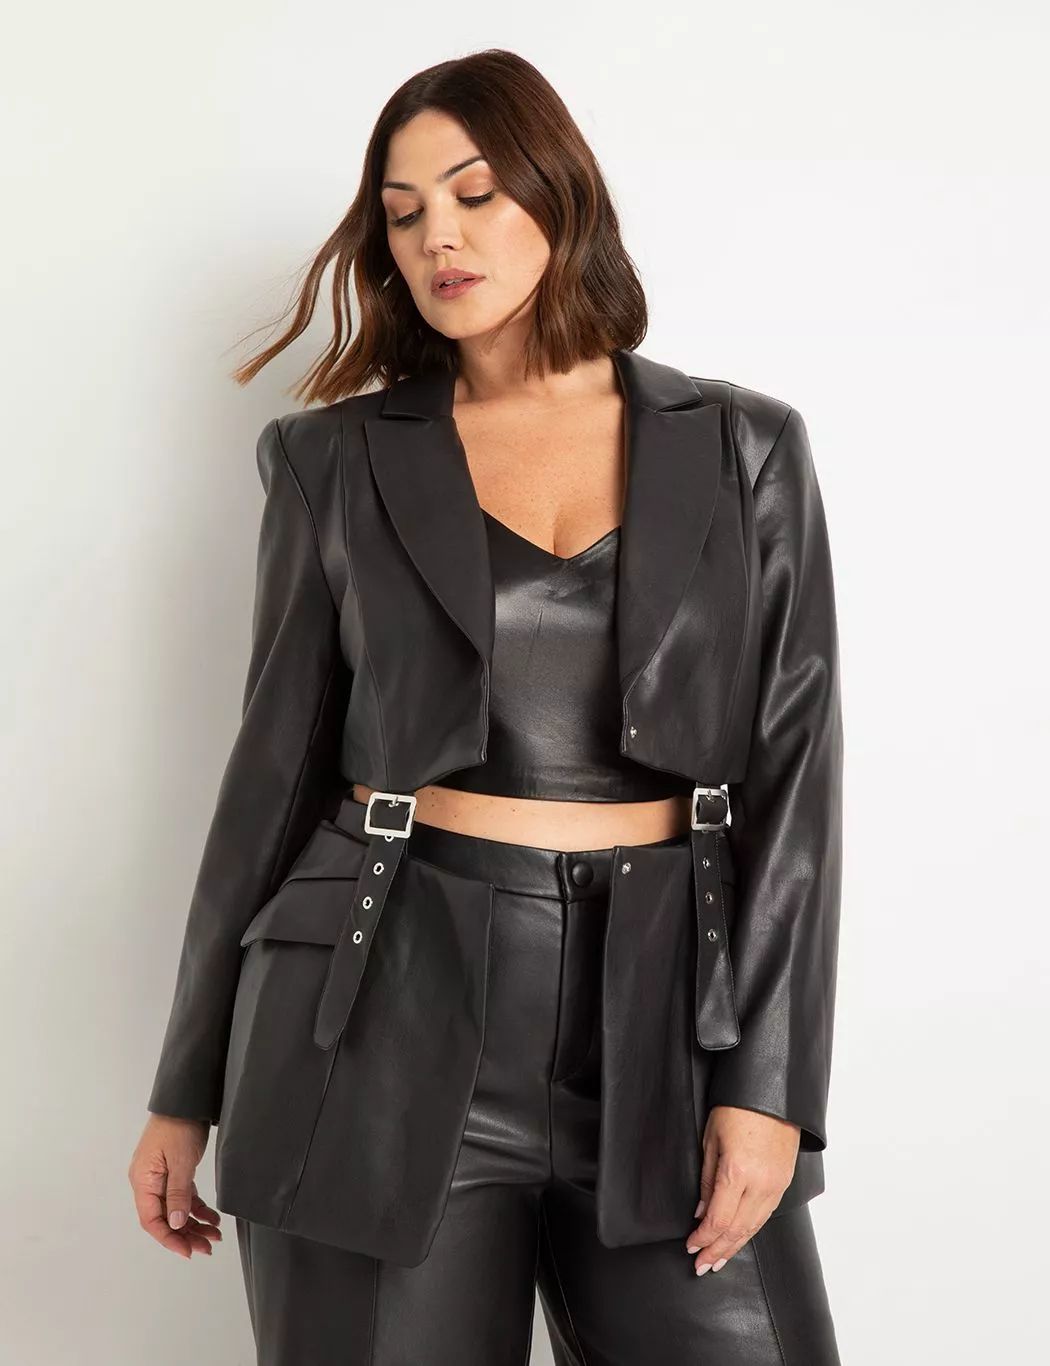 Buckle Detail Blazer | Women's Plus Size Coats + Jackets | ELOQUII | Eloquii